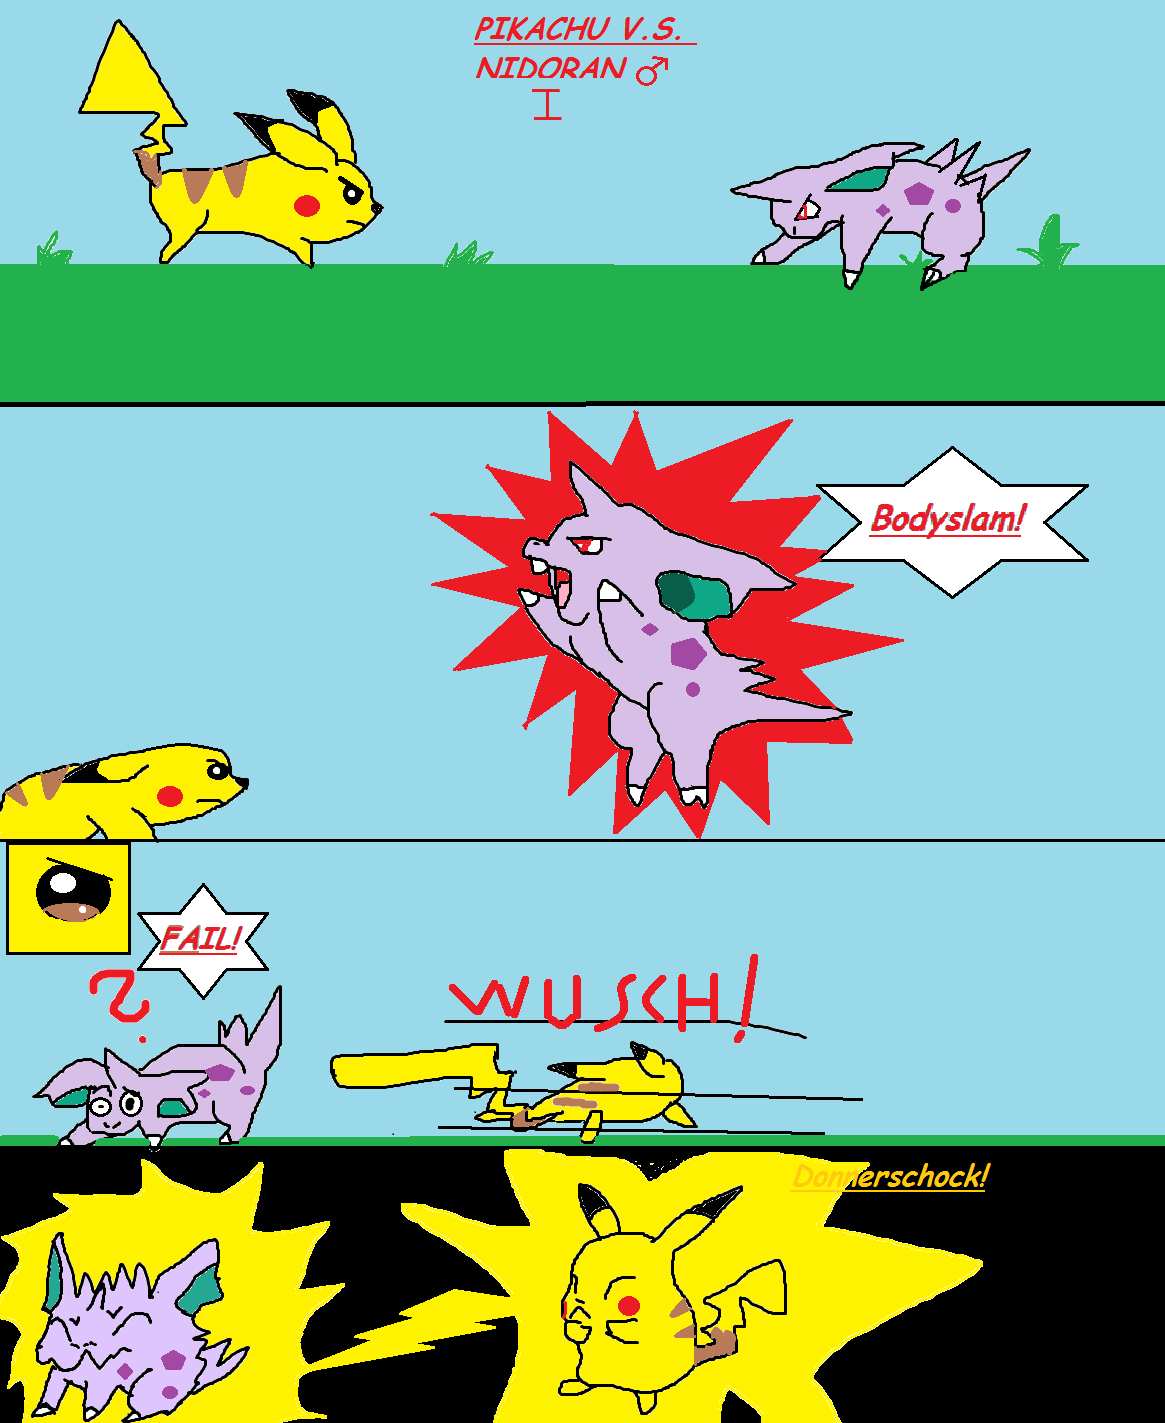 Pikachu v.s. Nidoran